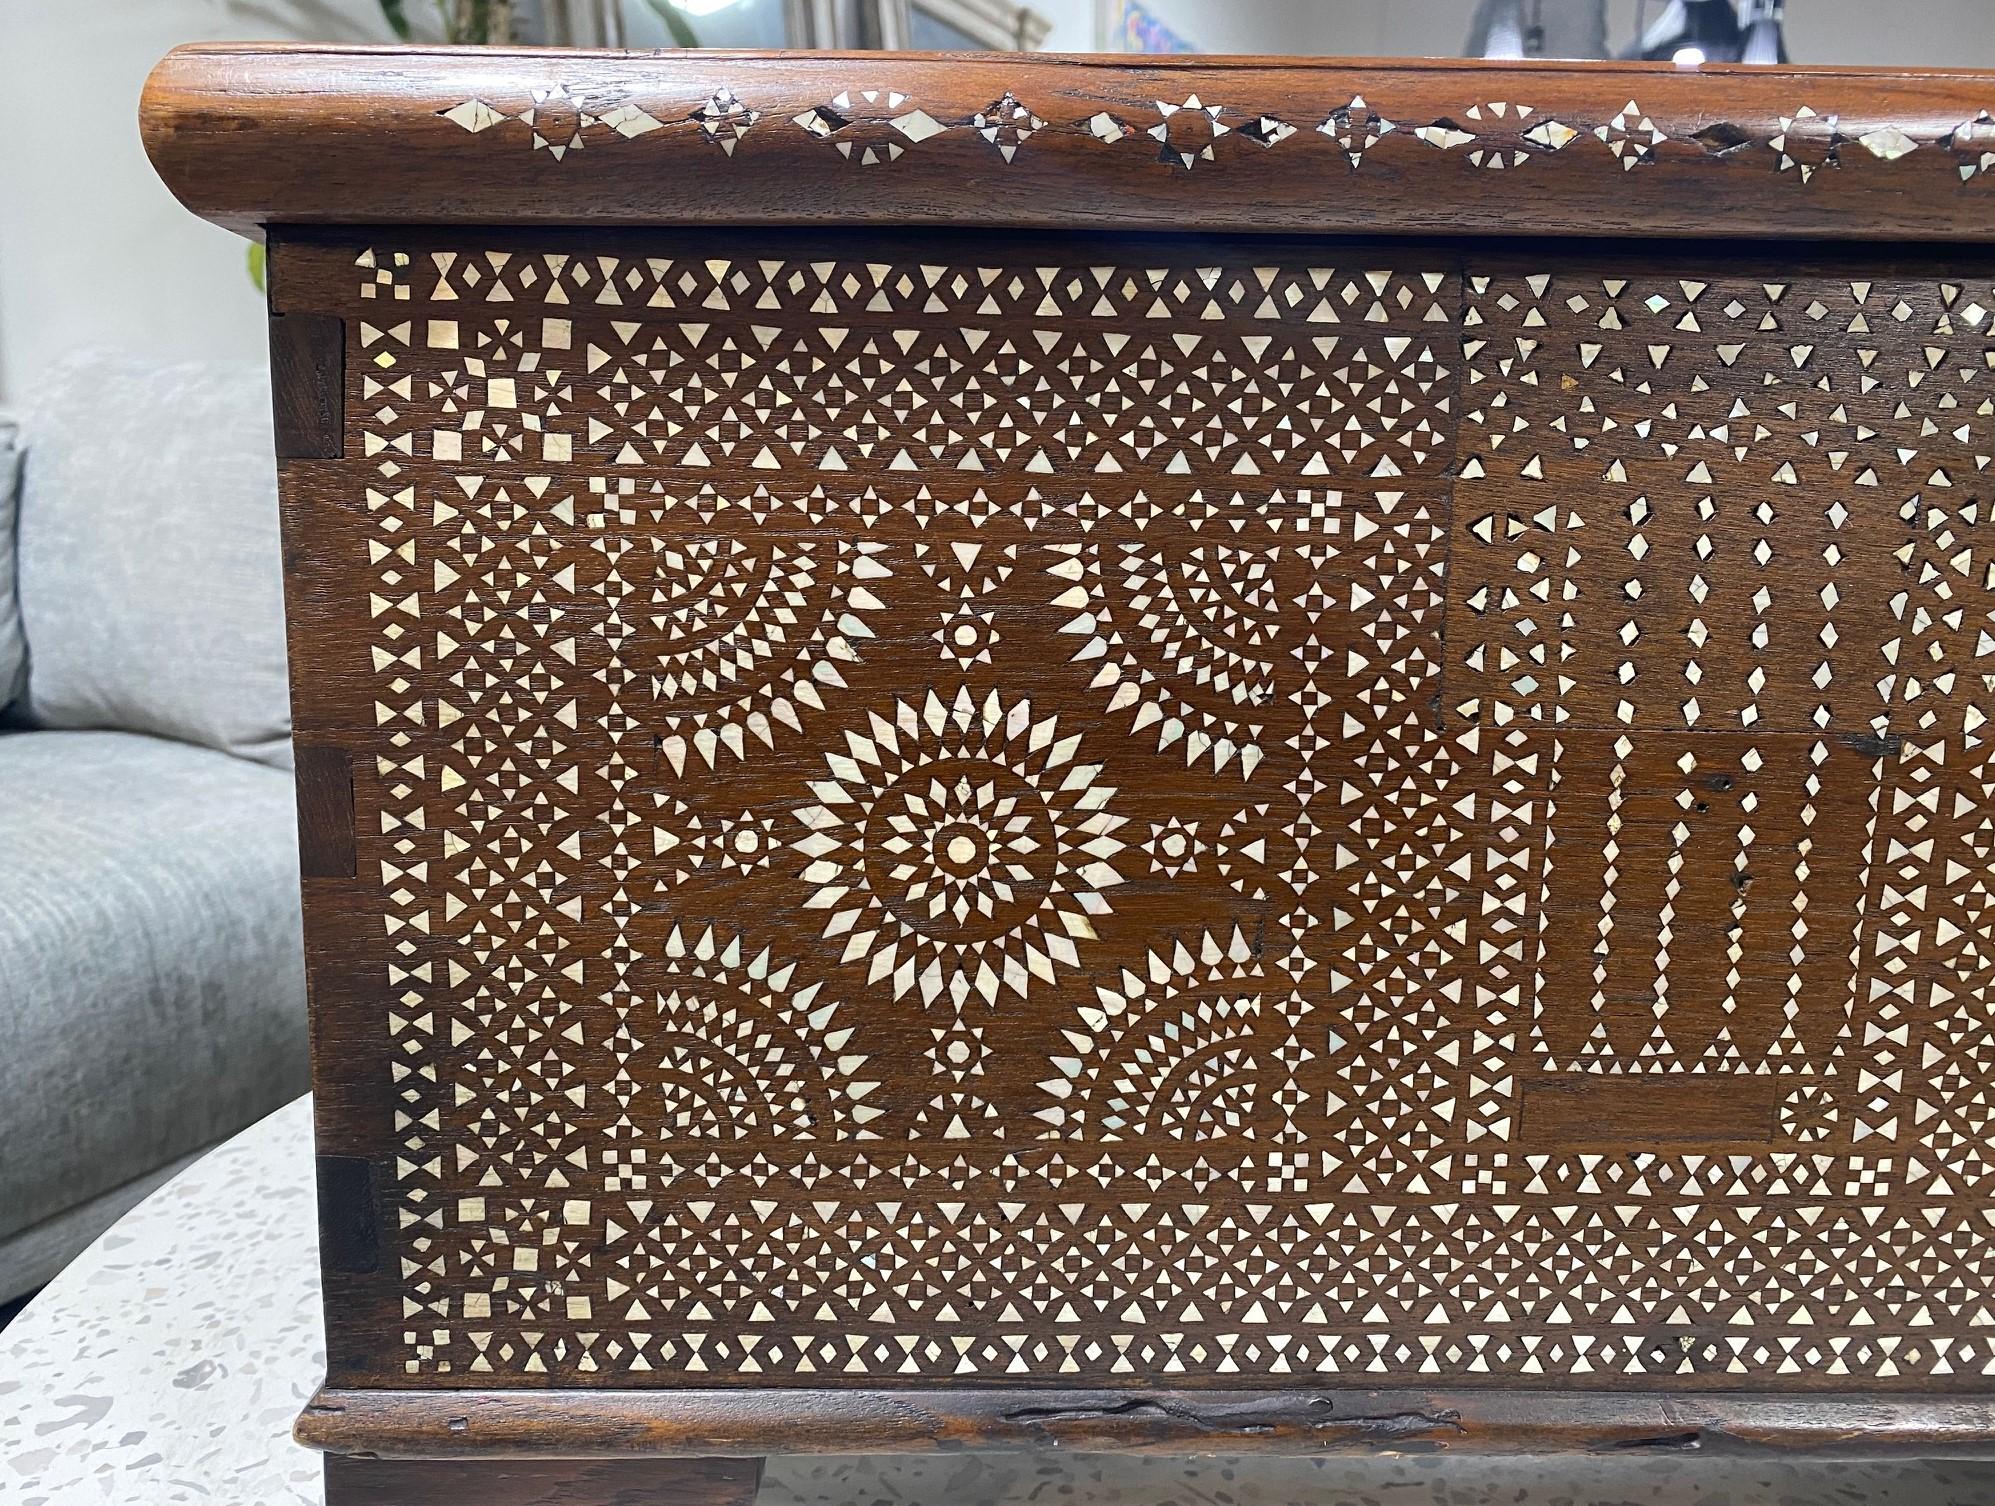 20th Century Beautiful Moorish Syrian or Asian Inlaid Inlay Wood Box Storage Chest Trunk For Sale